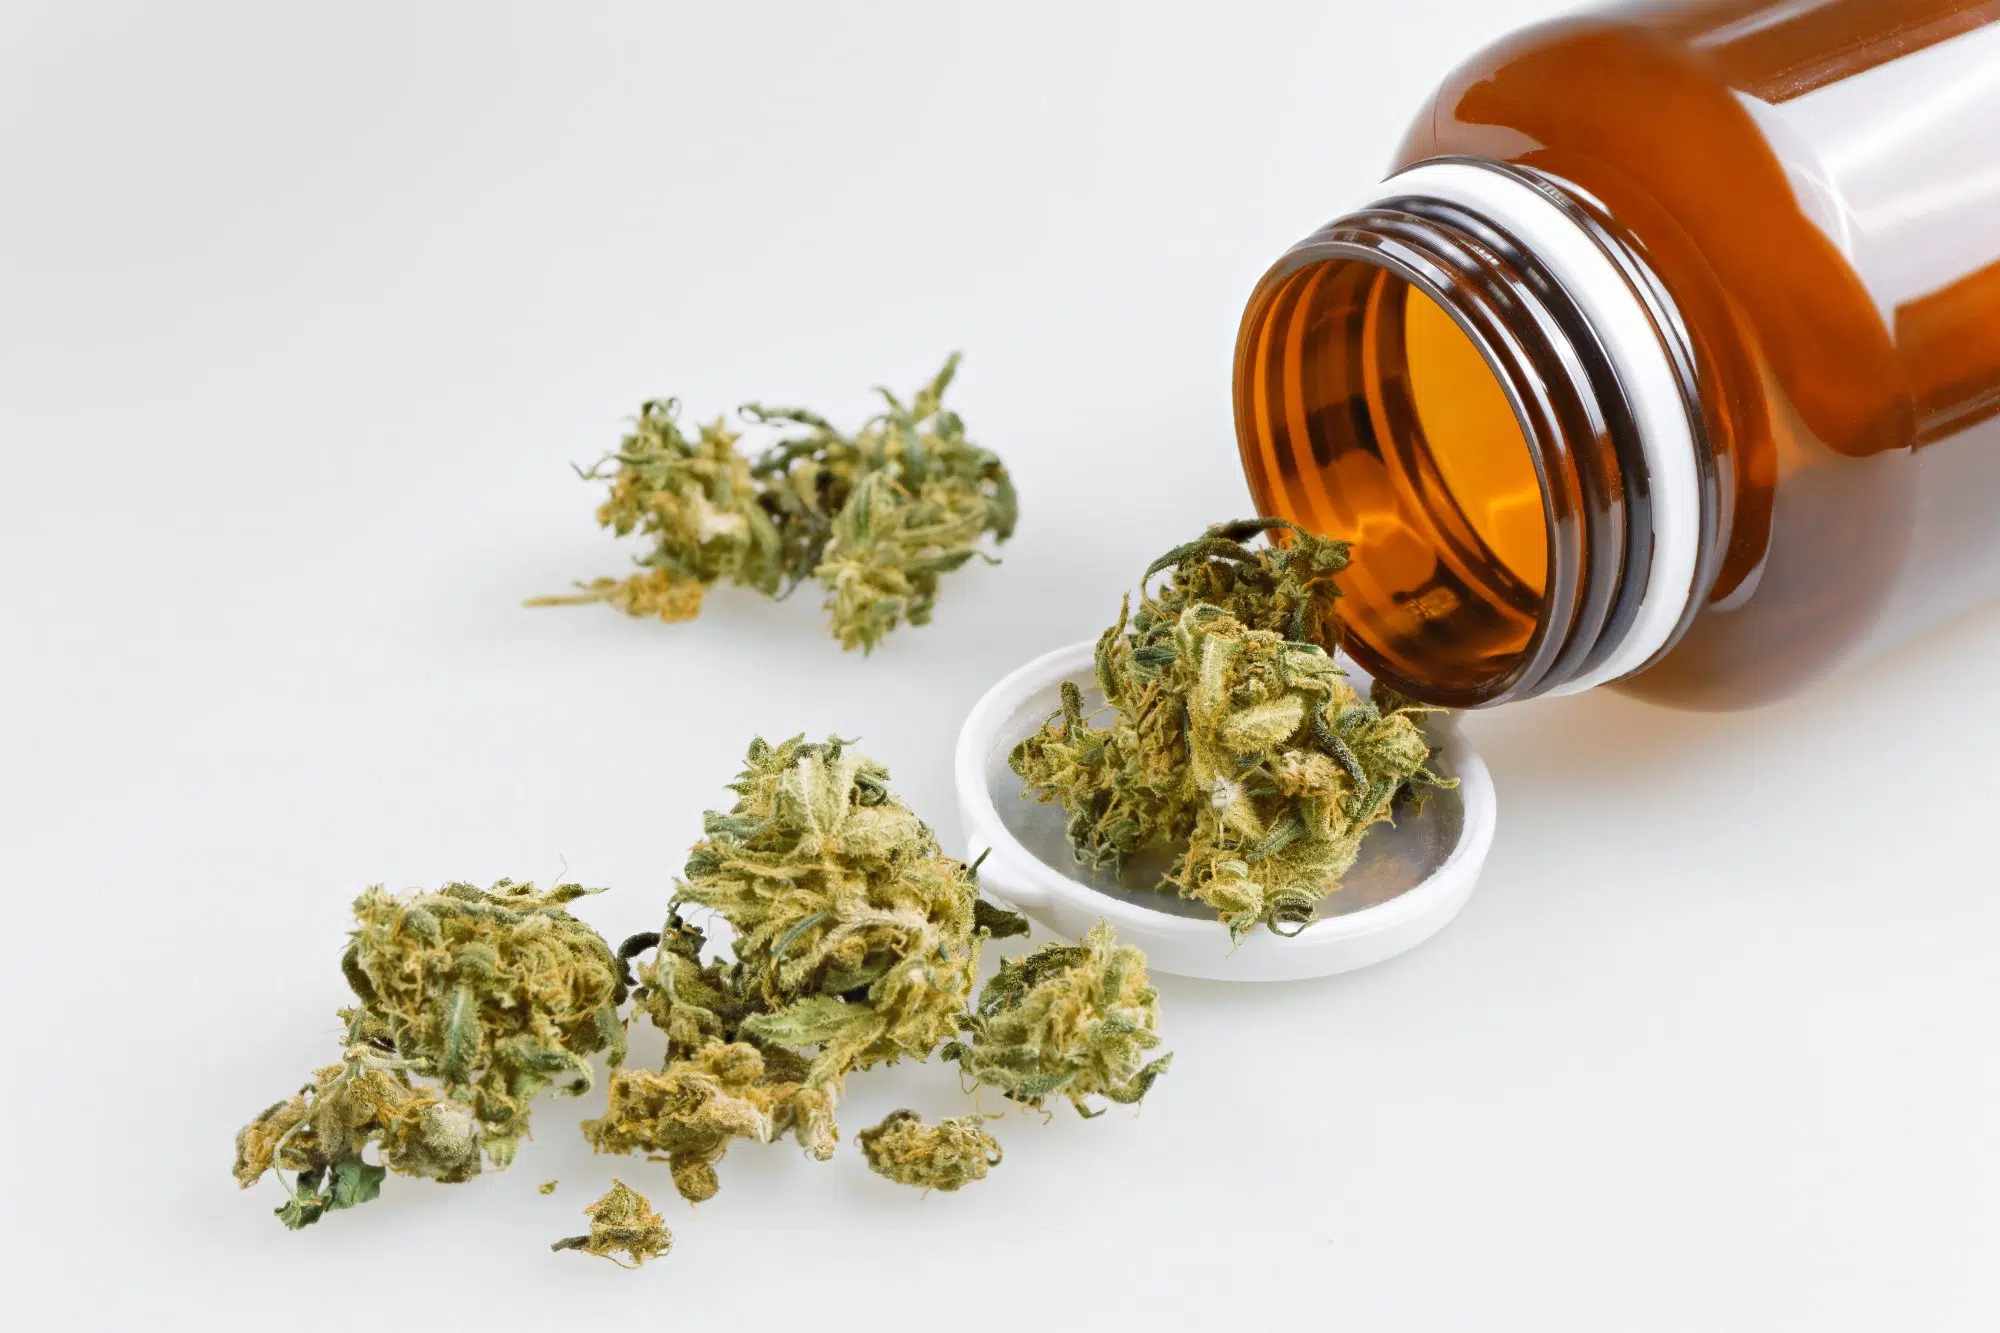 Natchez board ponders medical marijuana regulations